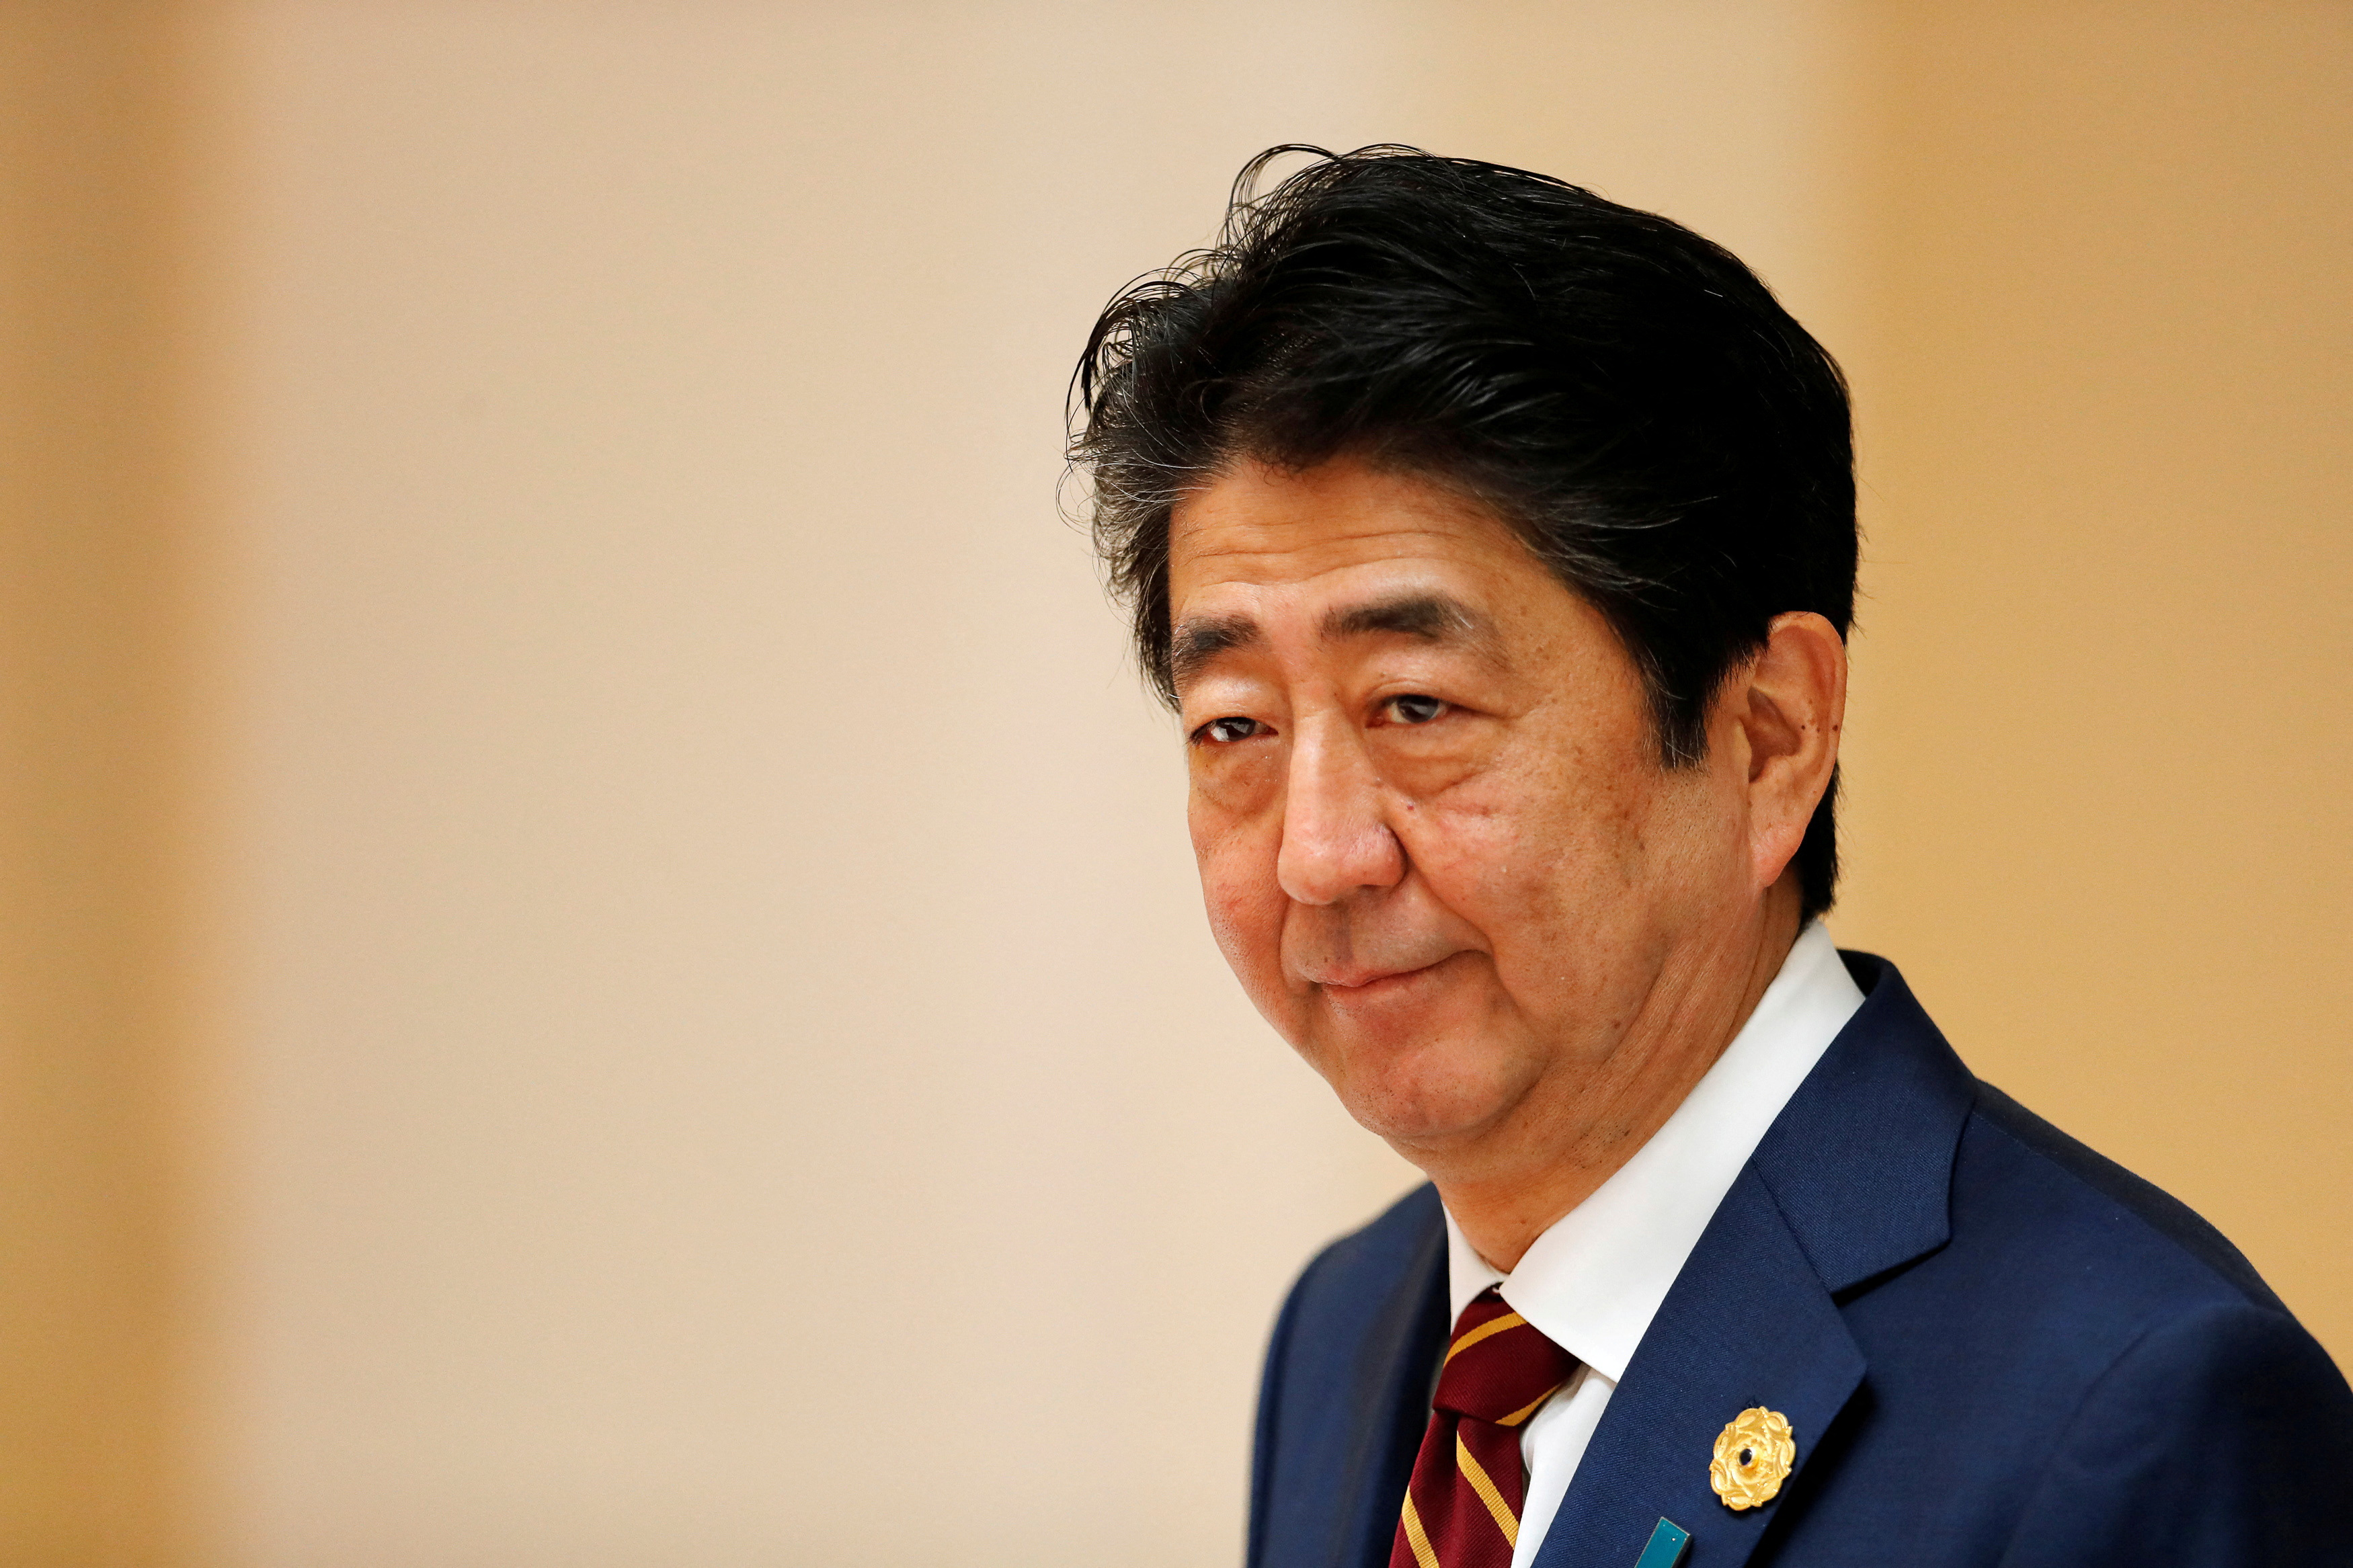 Japan's Prime Minister Shinzo Abe attends the APEC Economic Leaders' Meeting in Danang, Vietnam